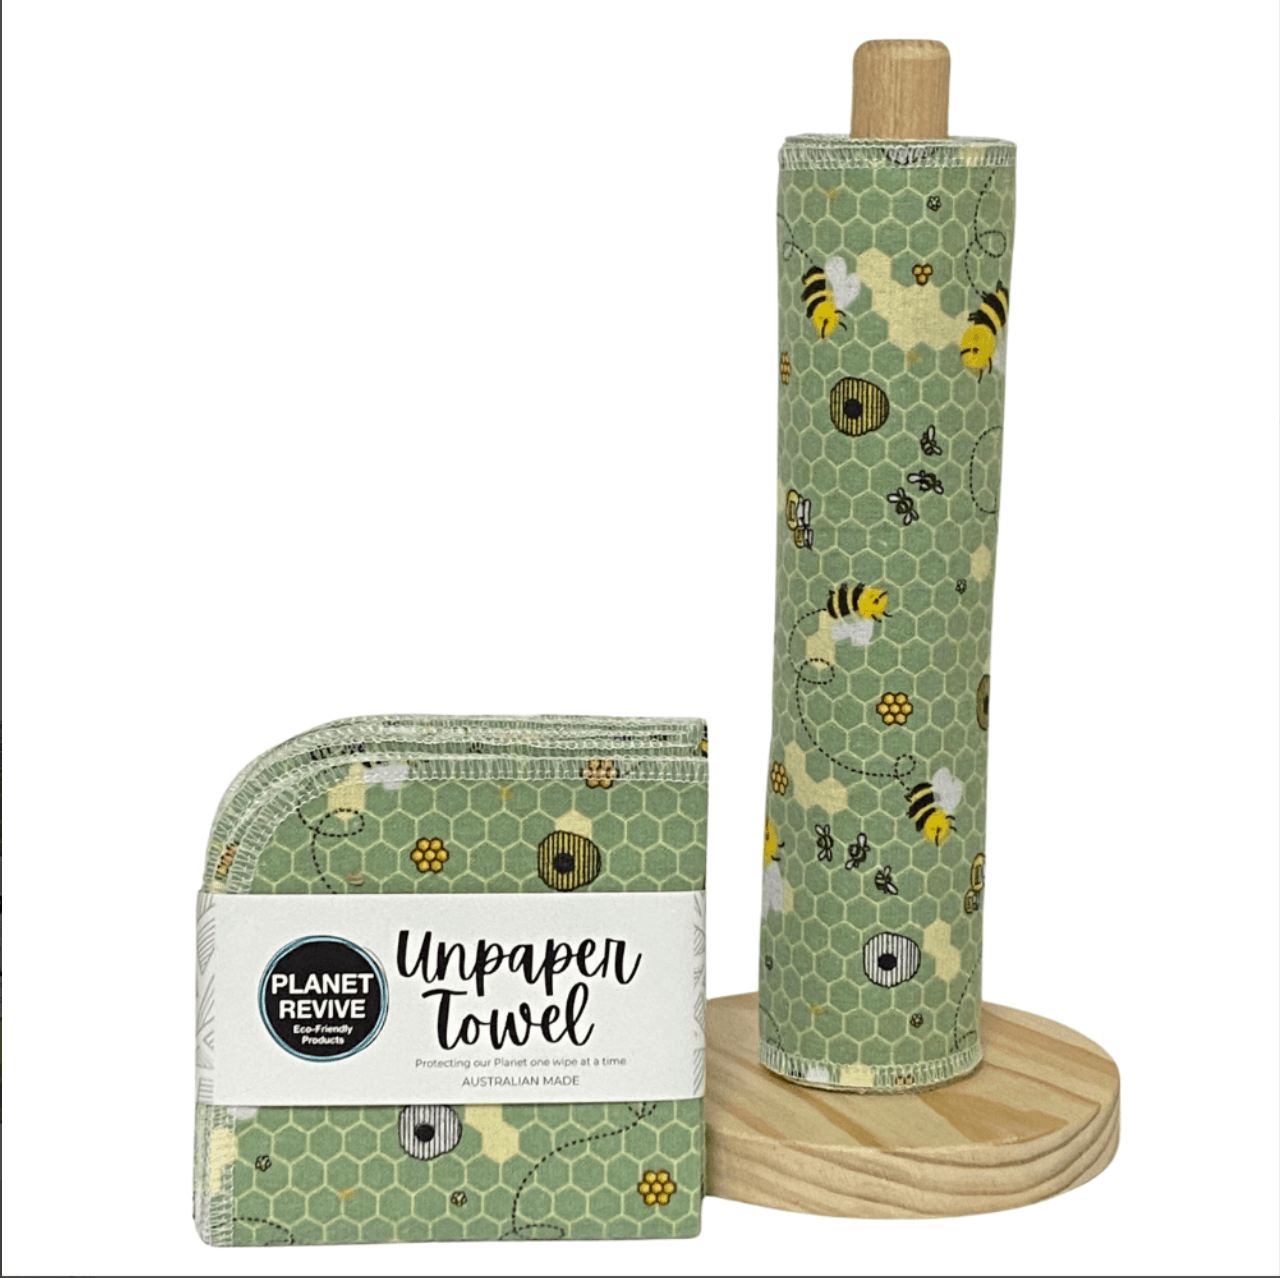 Unpaper Towel - Bees Planet Revive KitMaii